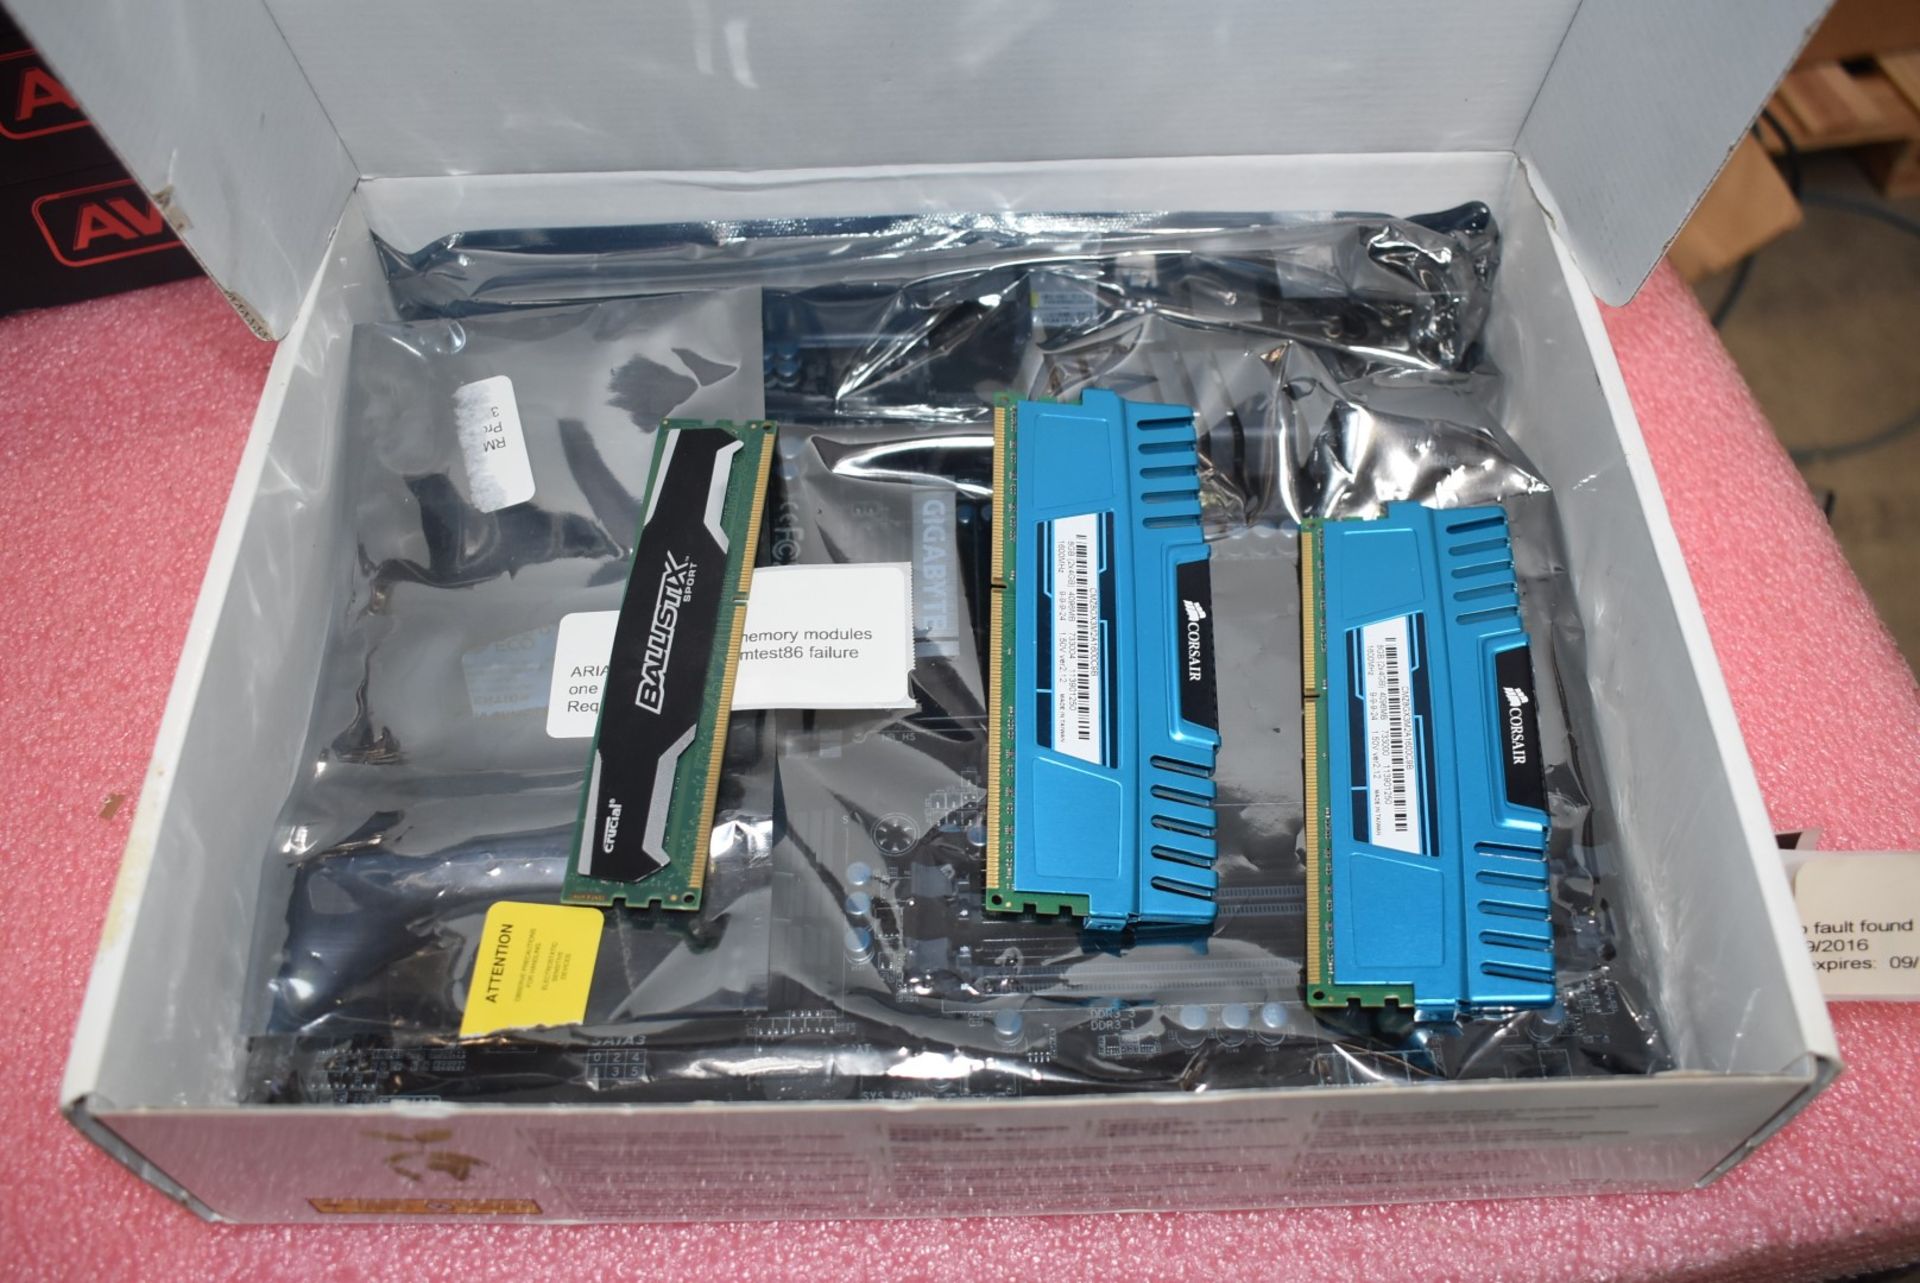 1 x Gigabyte GA-990FXA-UD3 AM3+ Motherboard With 8GB Ram - Includes Original Box - Image 7 of 7